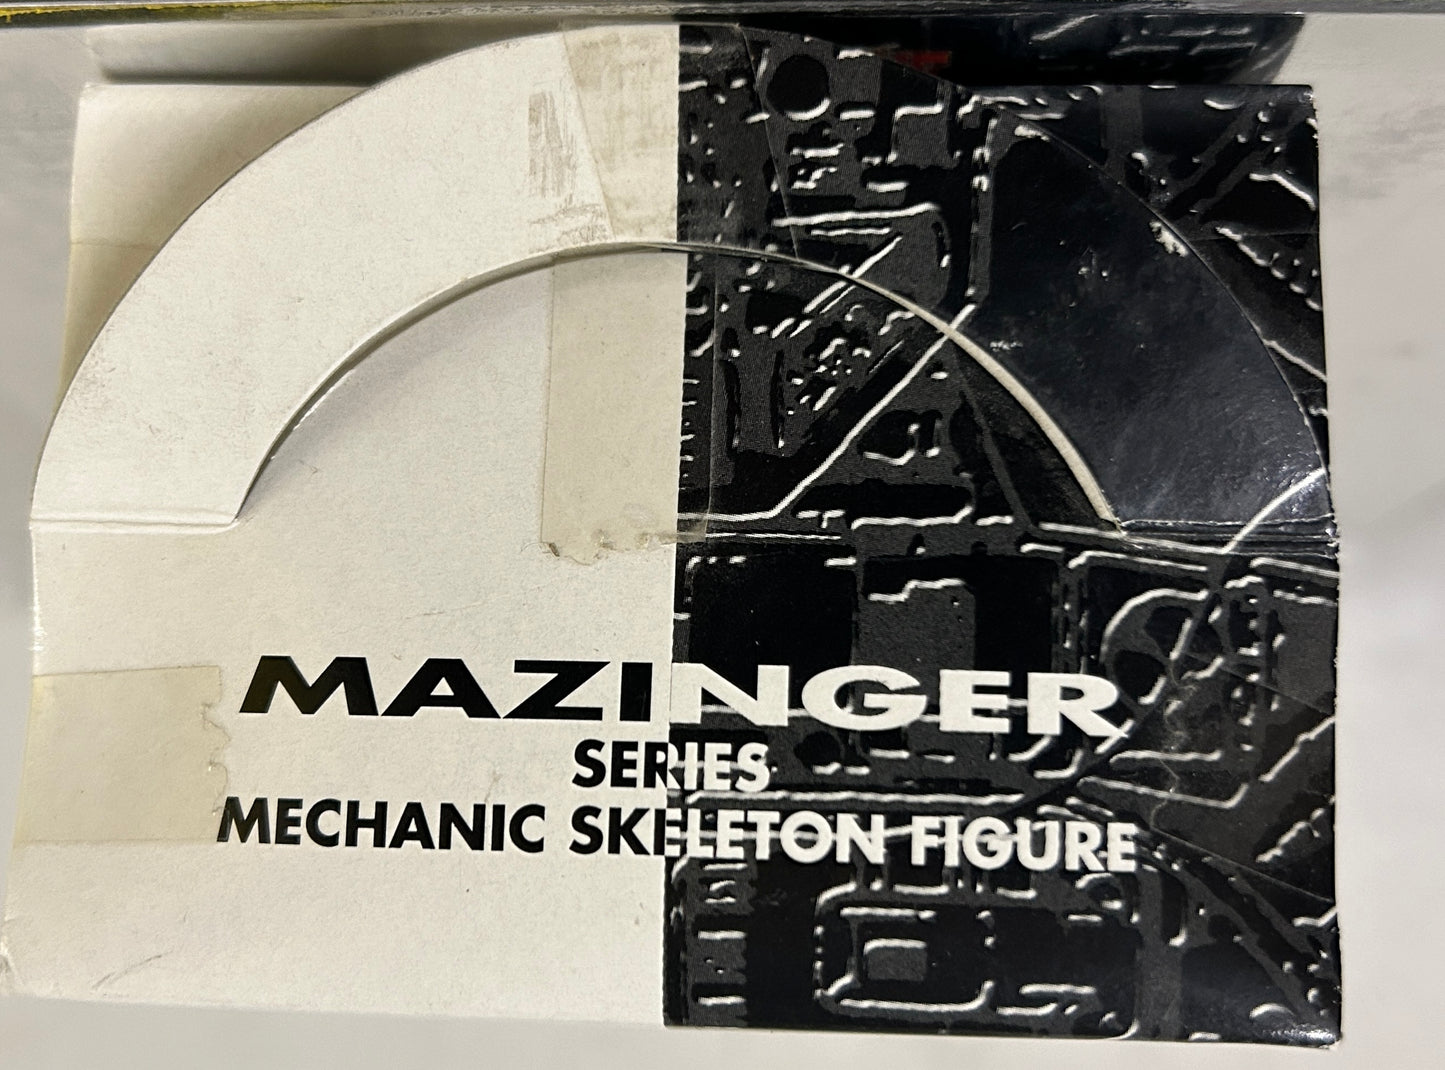 GOLDORAK Grendizer - Figurine GOLDORAK - Mazinger Series Skeleton Figure - 1999